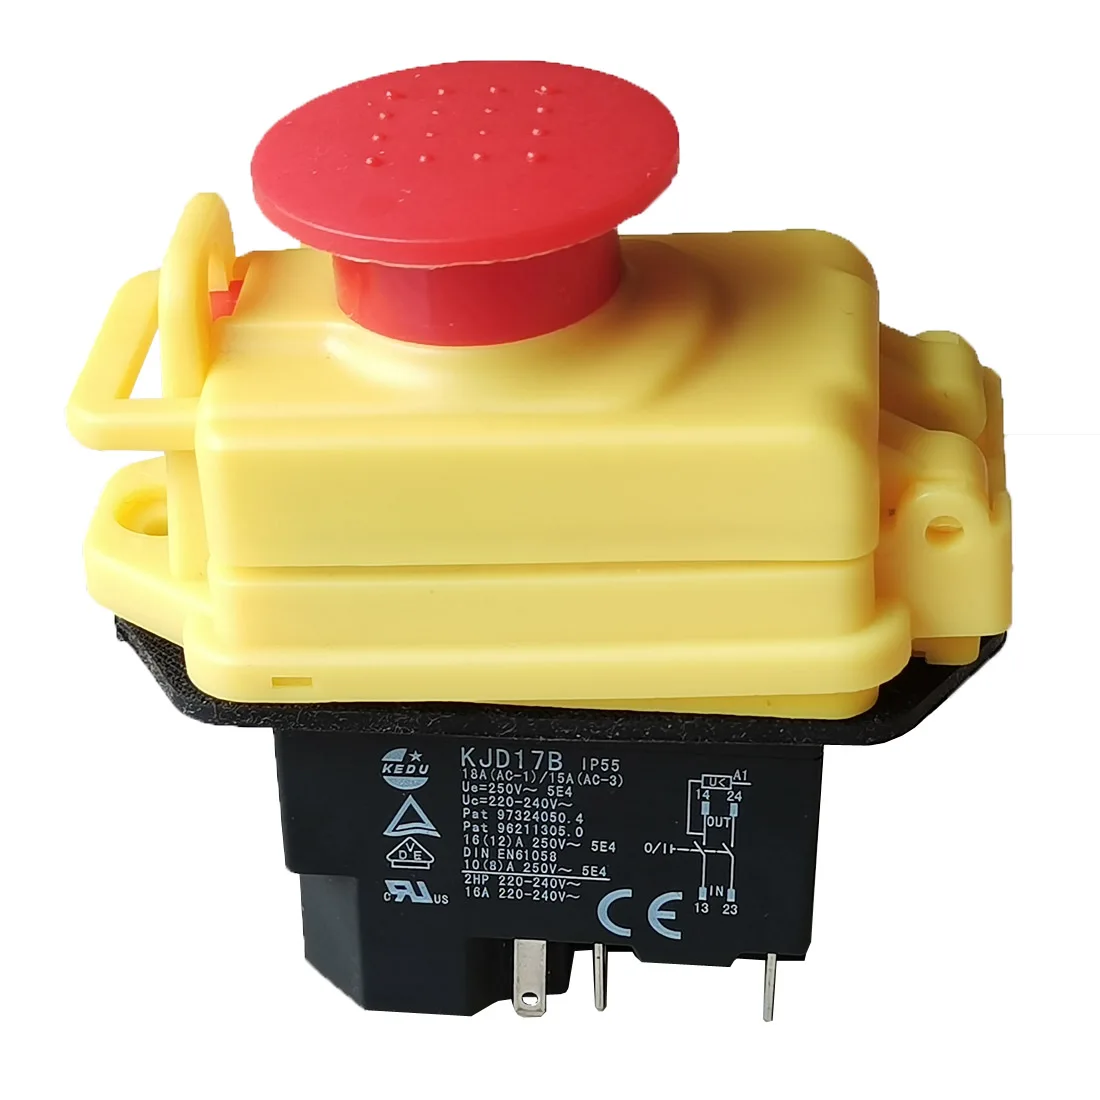 

KEDU Electromagnetic Pushbutton Switches Waterproof Emergency Stop Button Switch 16(12)A 10(8)A 250V 2HP 16A 220-240V KJD17B